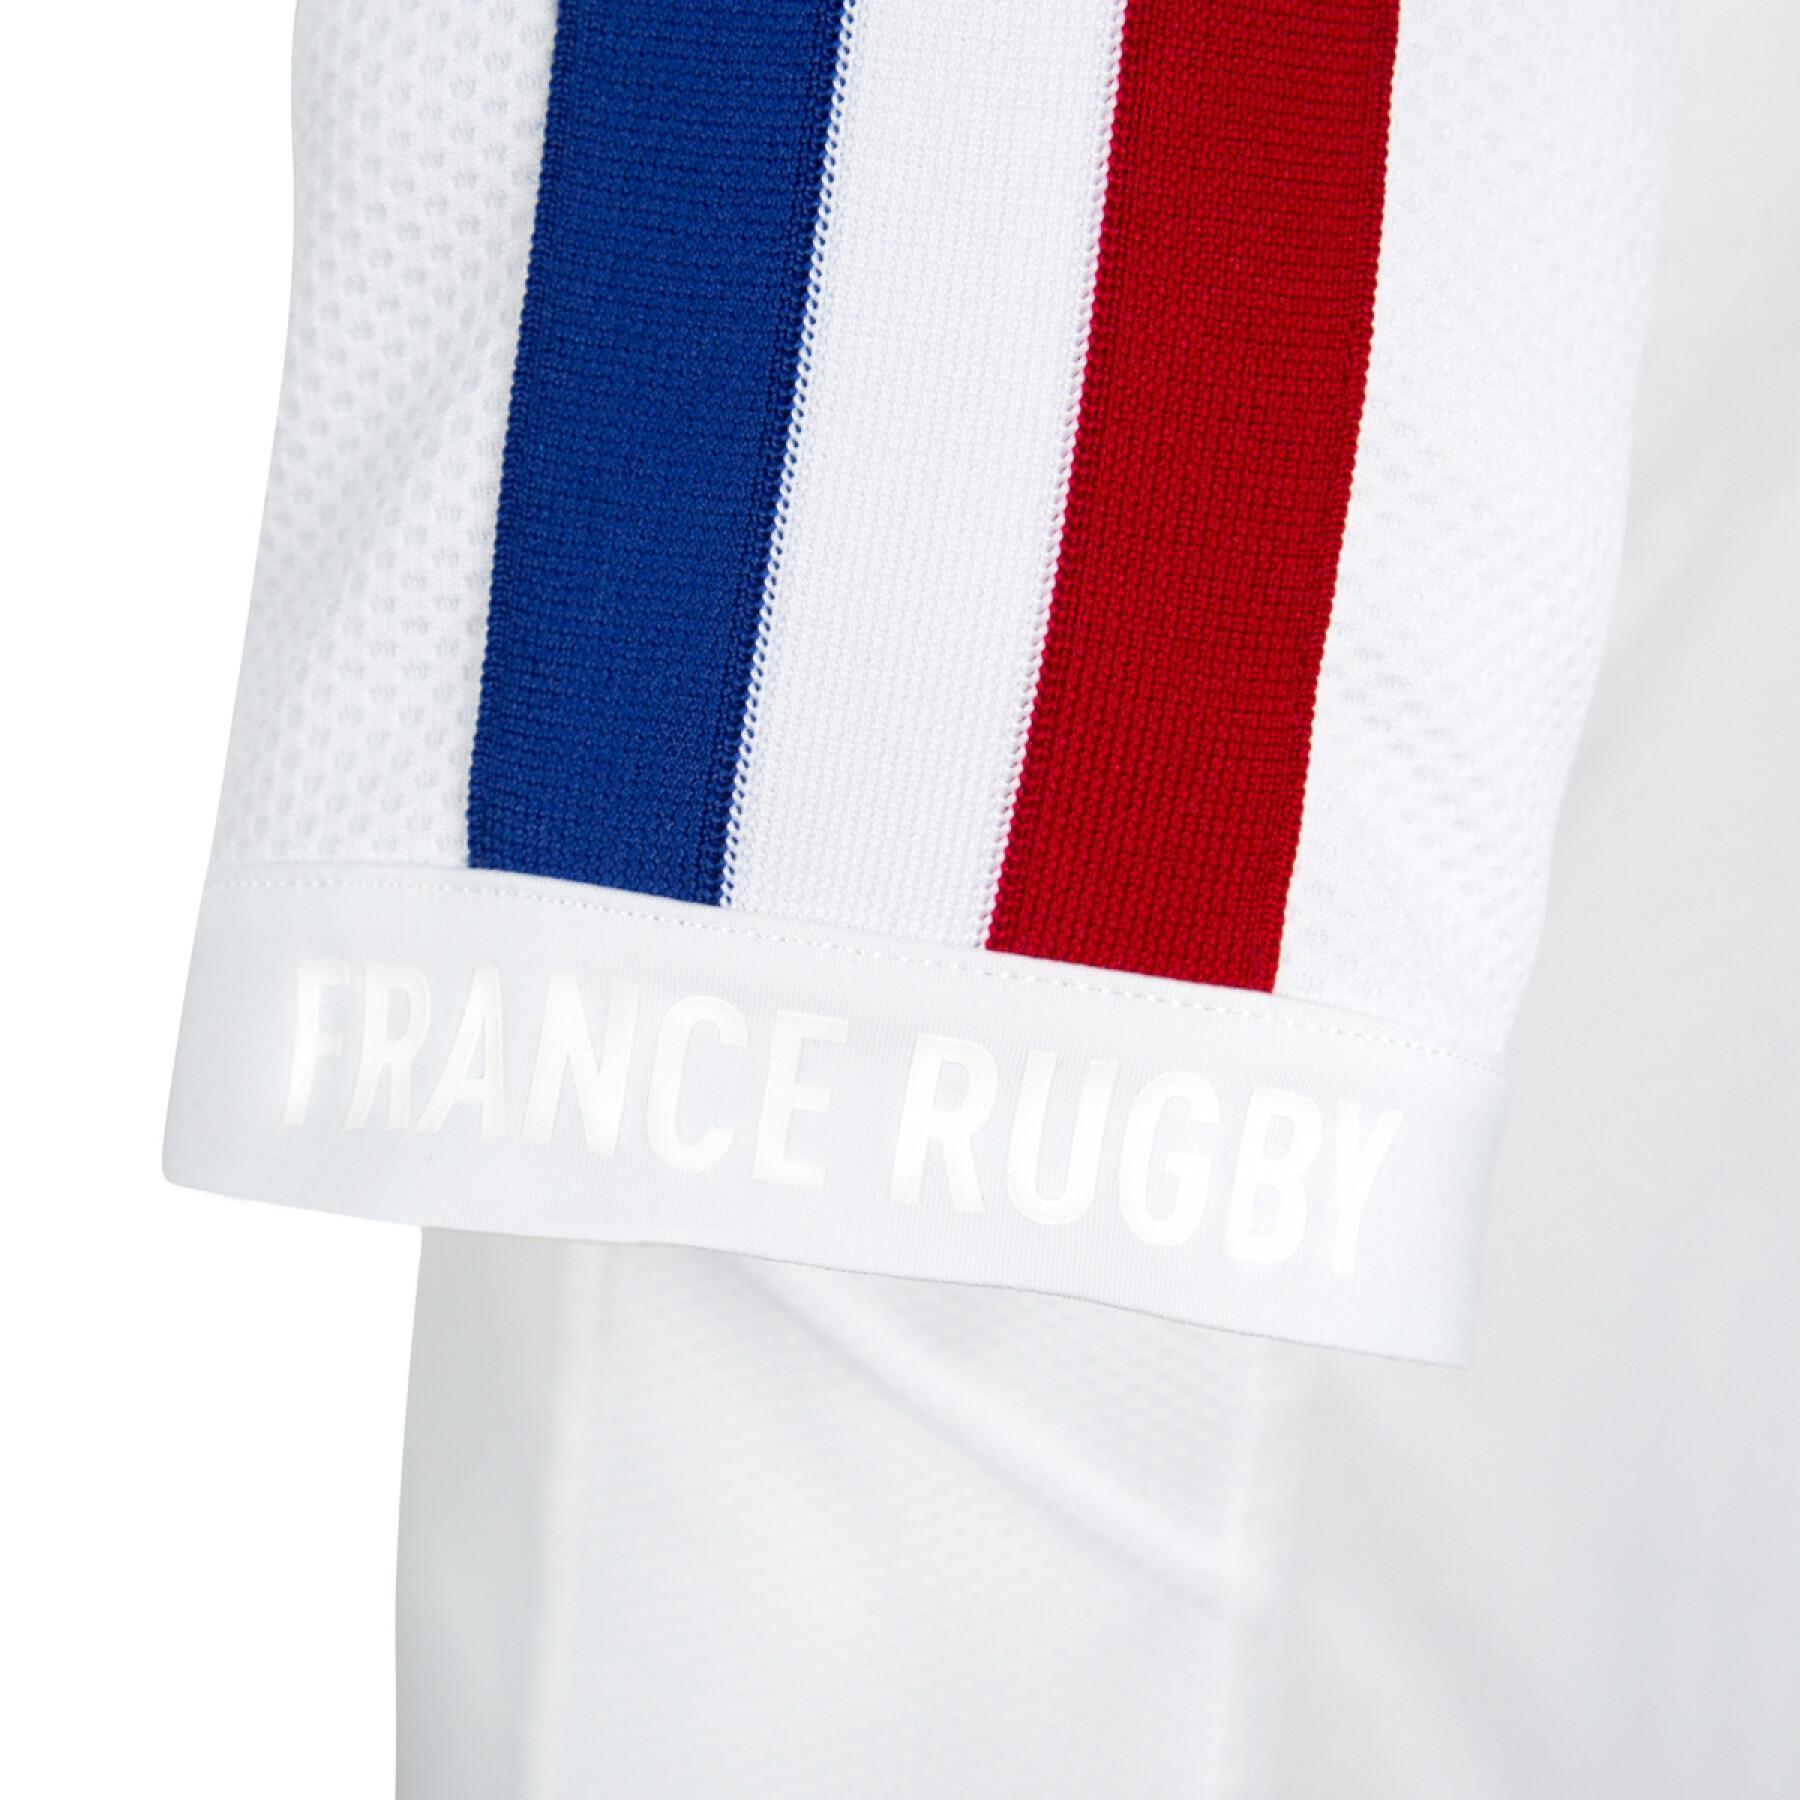 Jersey XV de France